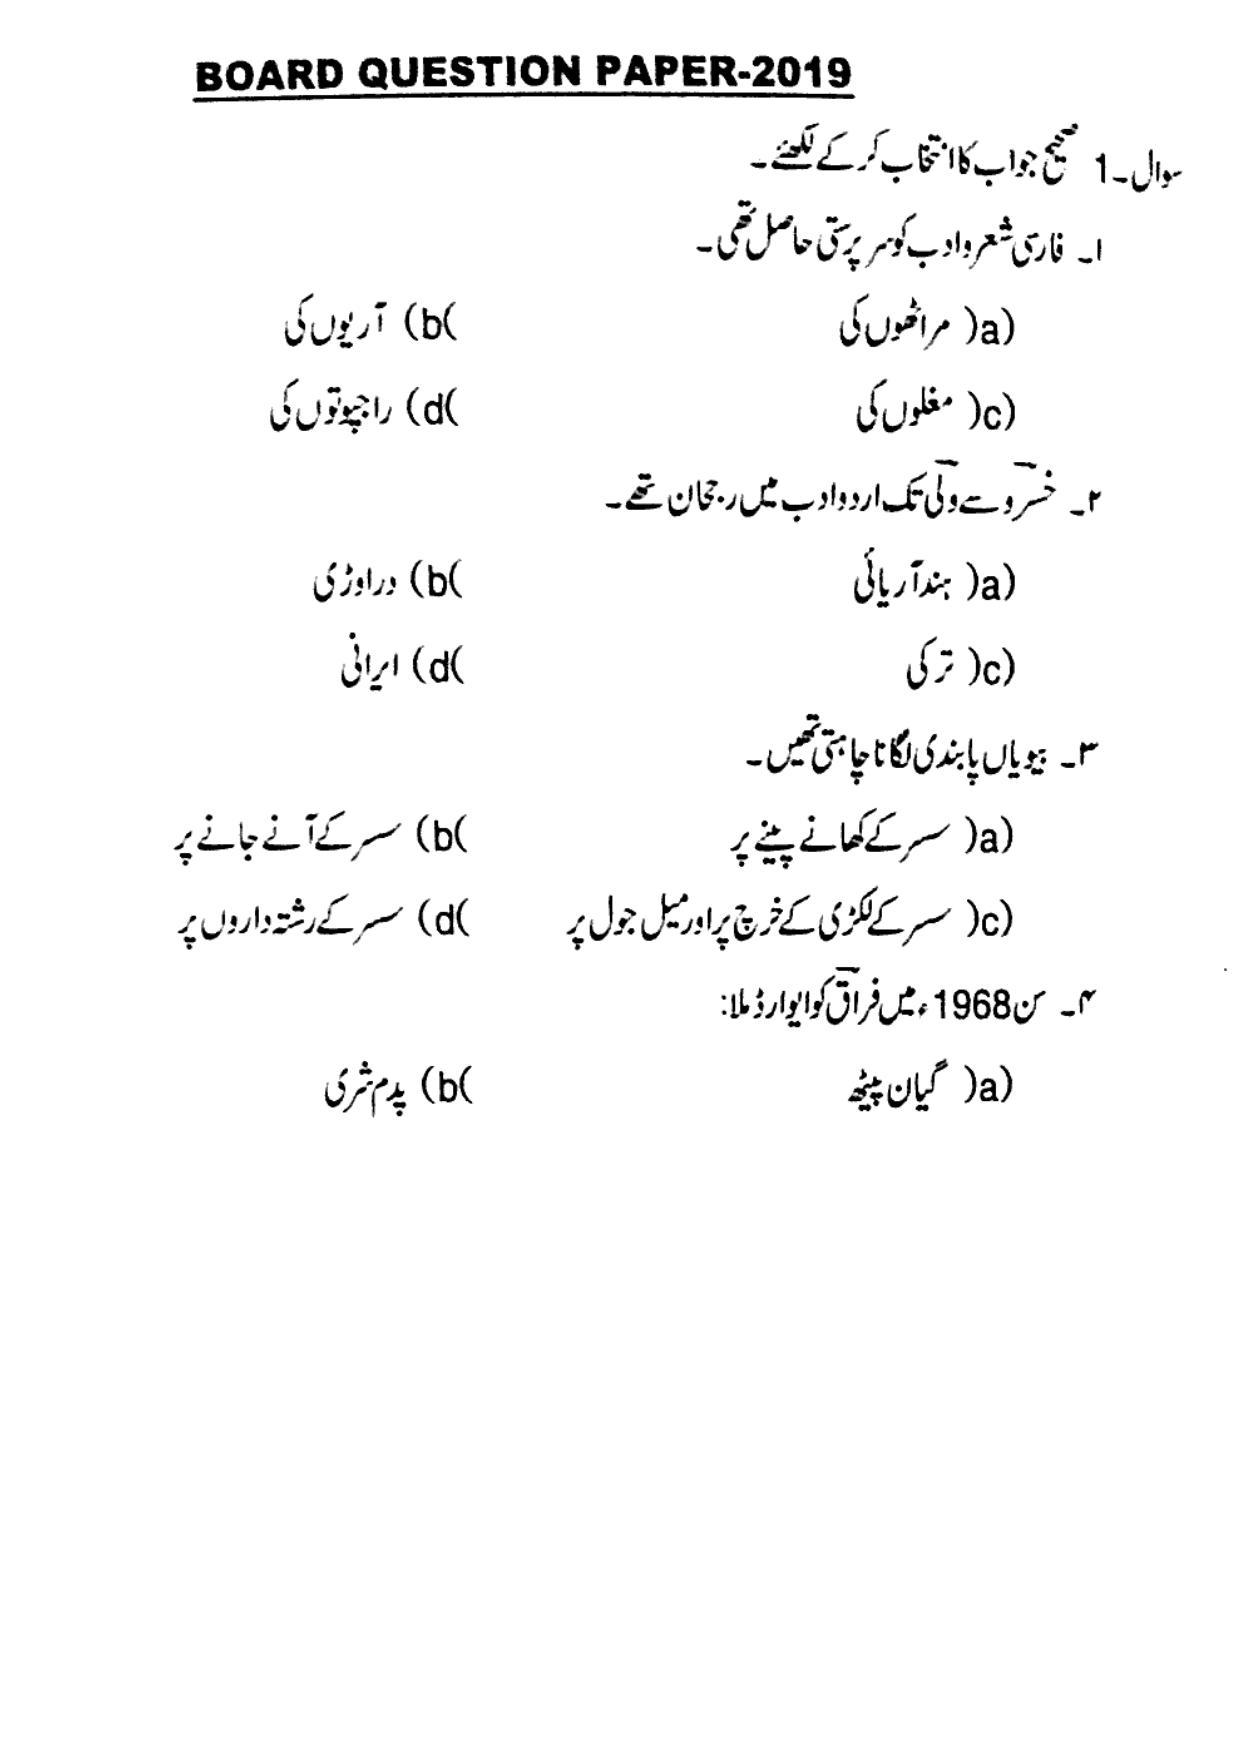 MP Board Class 12 Urdu 2019 Question Paper - Page 1